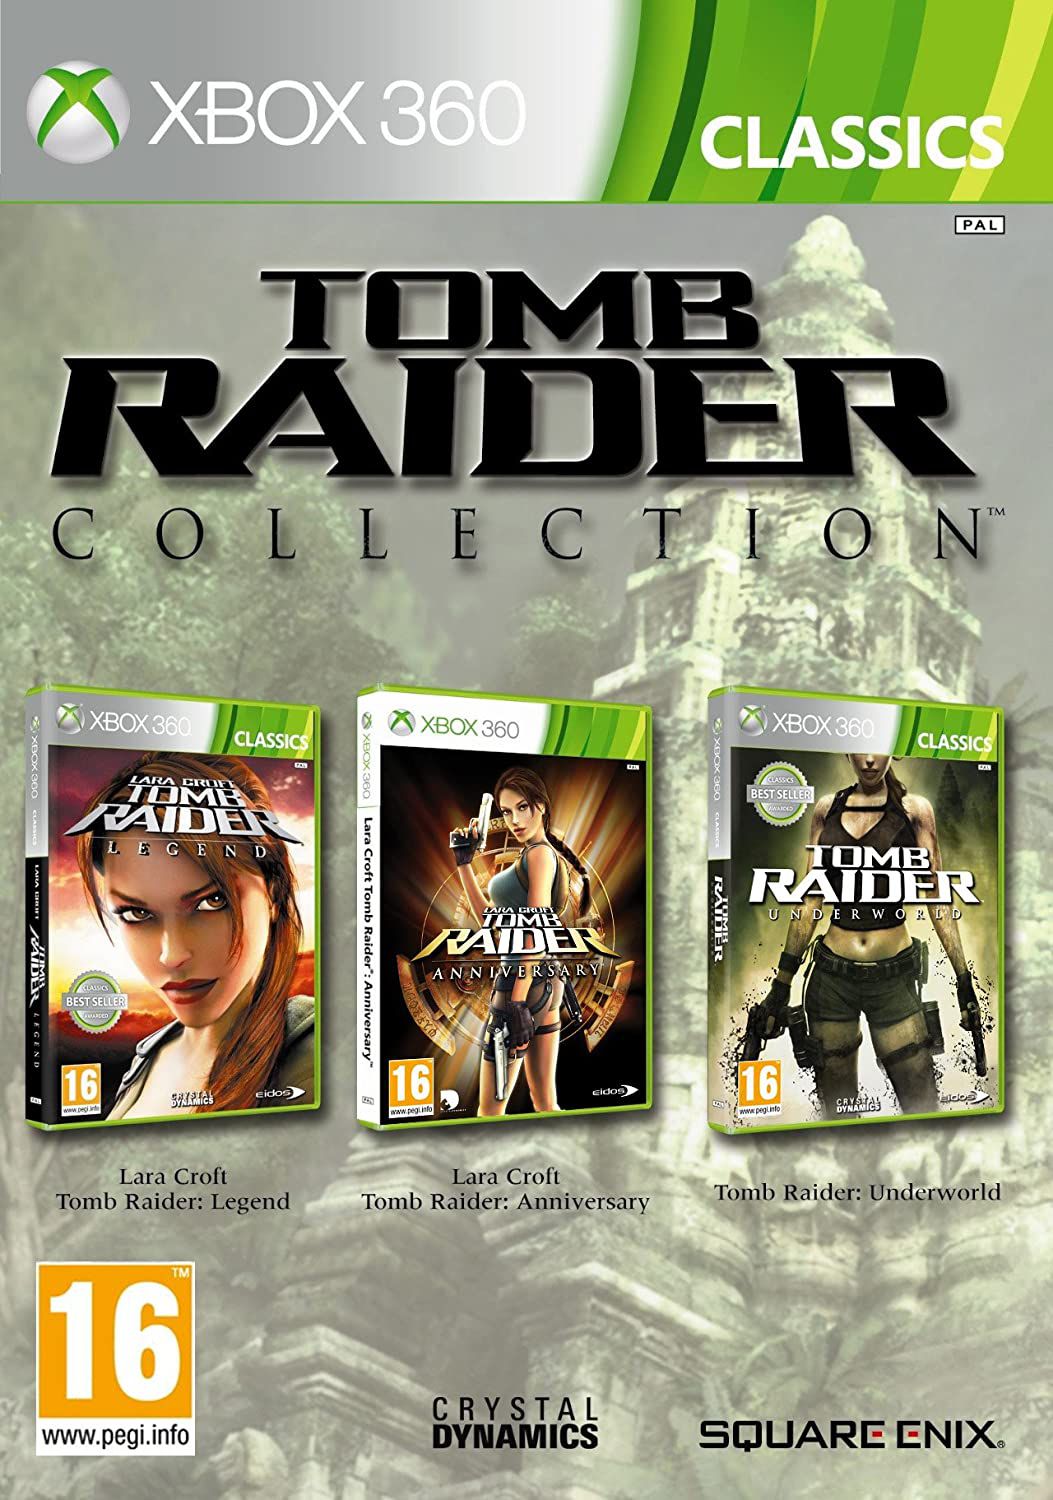 Tomb Raider Lend Midia Digital Xbox 360 - Wsgames - Jogos em Midias Digitas